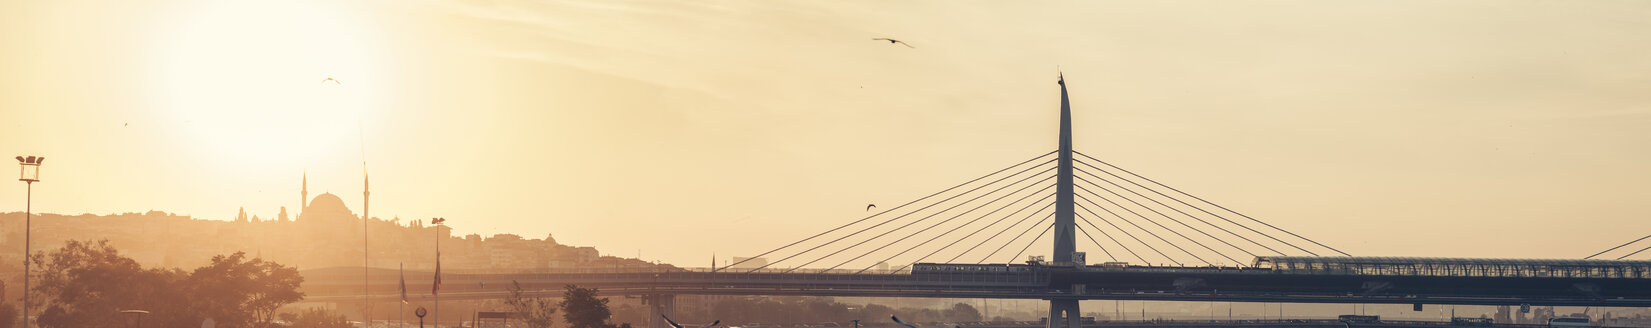 Turkey, Istanbul, Golden Horn, Bosphorus Bridge at sunset - BZF000349